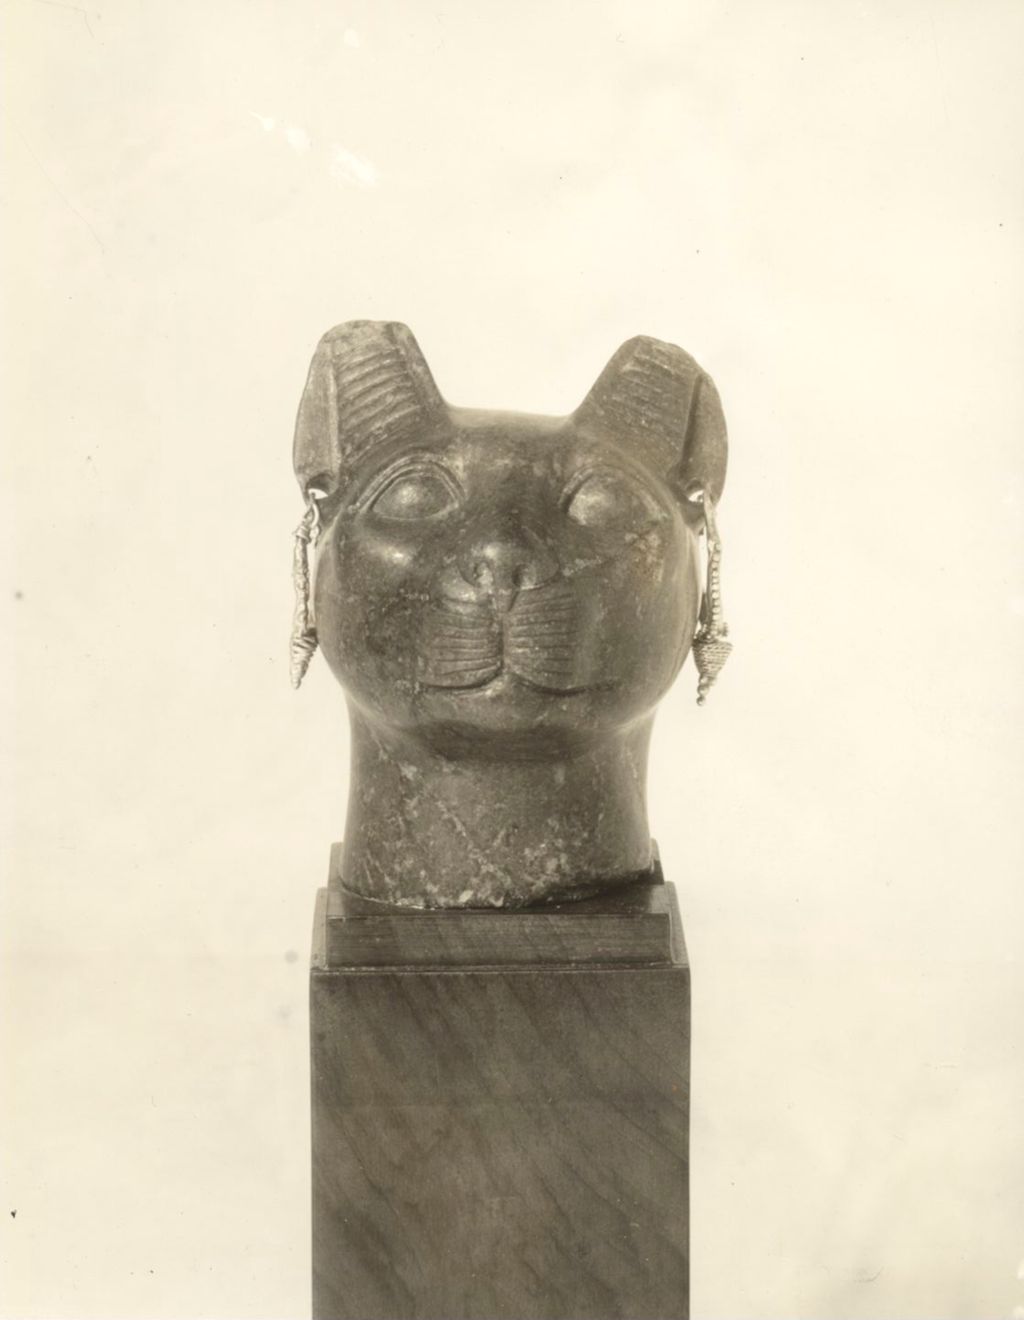 Miniature of Smiling Egyptian cat-goddess Bast